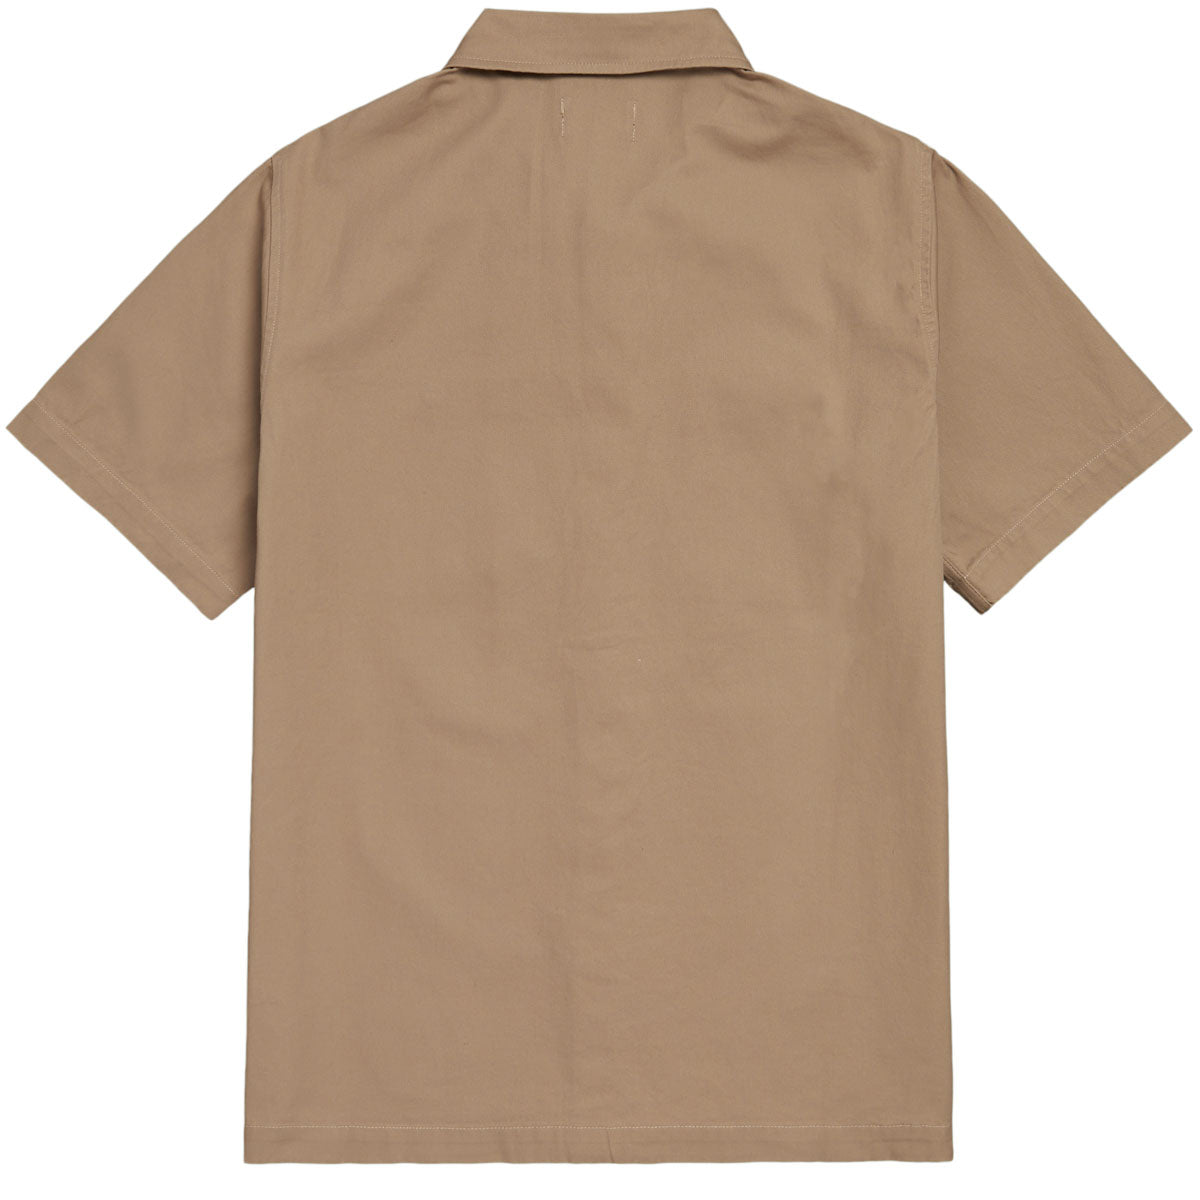 CCS Heavy Cotton Work Shirt - Khaki image 2